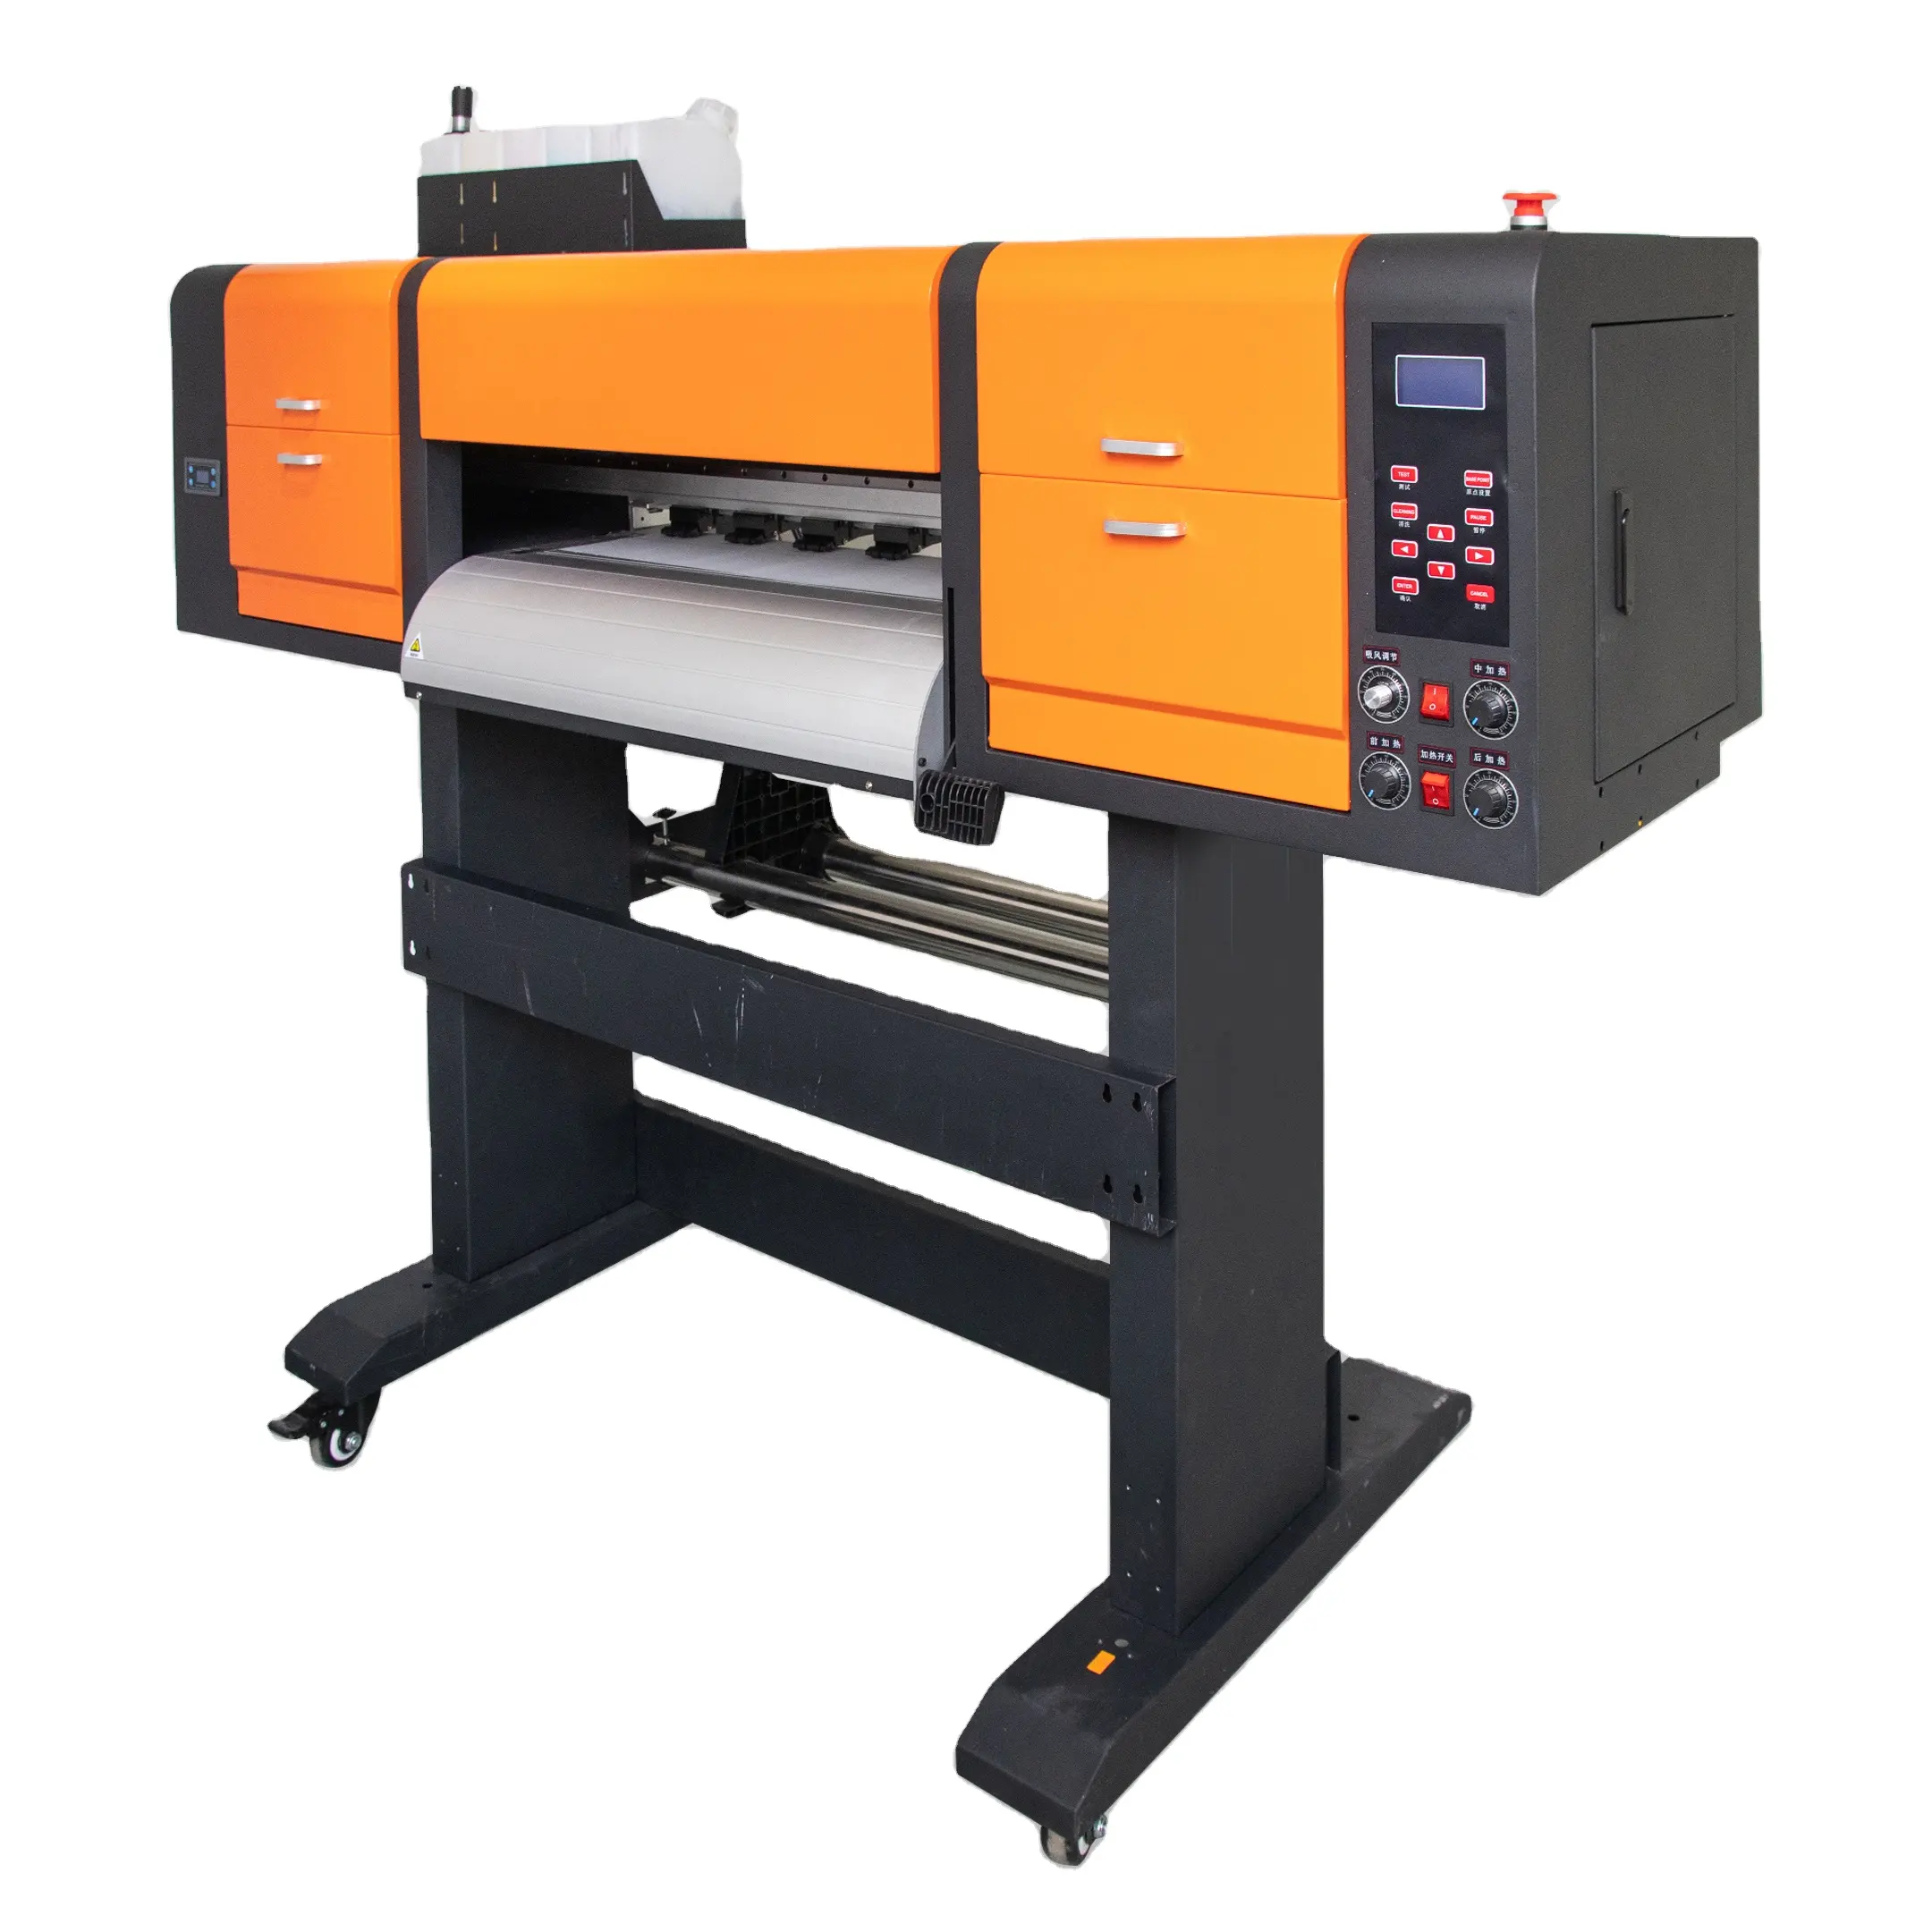 Sixfar jumbo roll perforating machine DTF Printer DIY Heat Transfer DTG T shirt Printing Machine Digital PET Film Printer